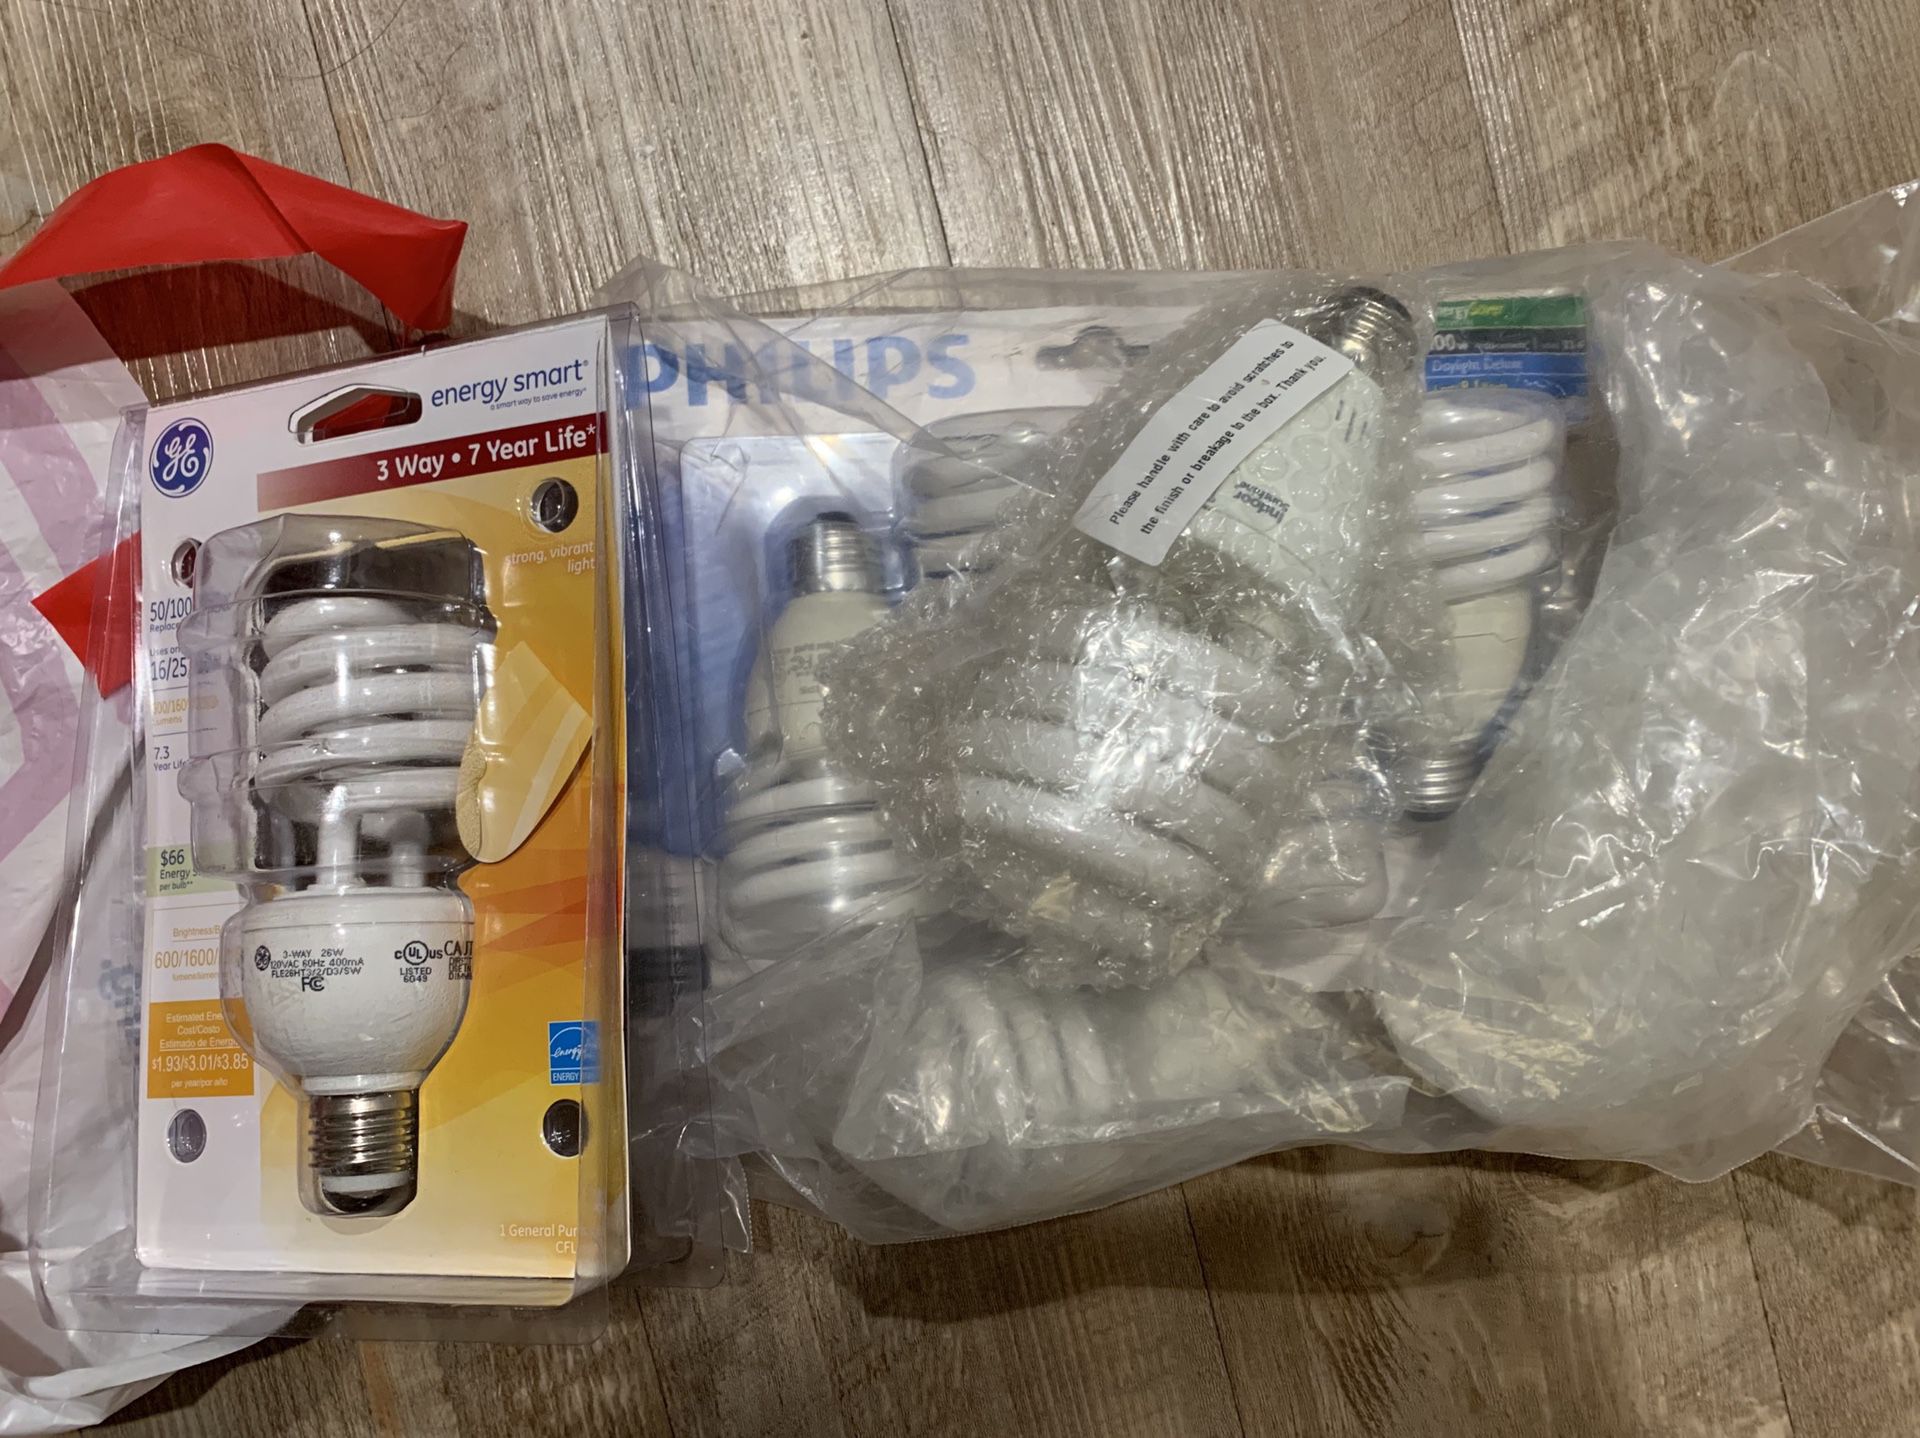 Free CFL light bulbs